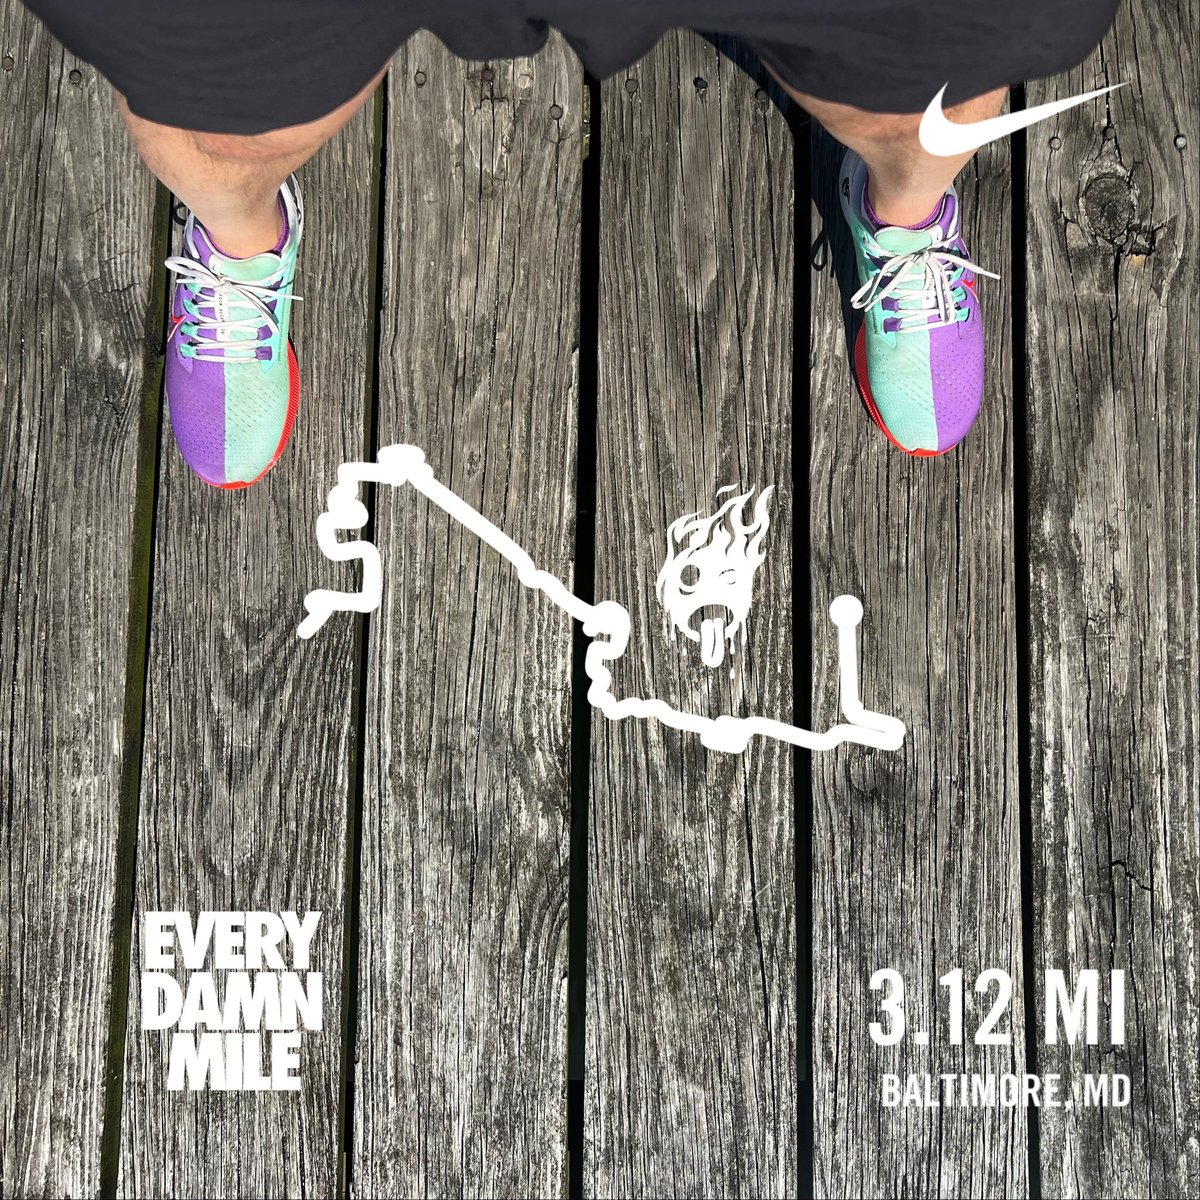 Ran 3.12 miles with Nike⁠ Run Club #fridayrun #vacationrun #staycationrun #5k #everydamnmile #nikerunning #everyrunhasapurpose #outdoorrunning #run #runchat #nikeplus #thisisaboutrunning  #thisisnotaboutrunning #insipiration #nikerunclub 🎉✌️🏃‍♂️@nike